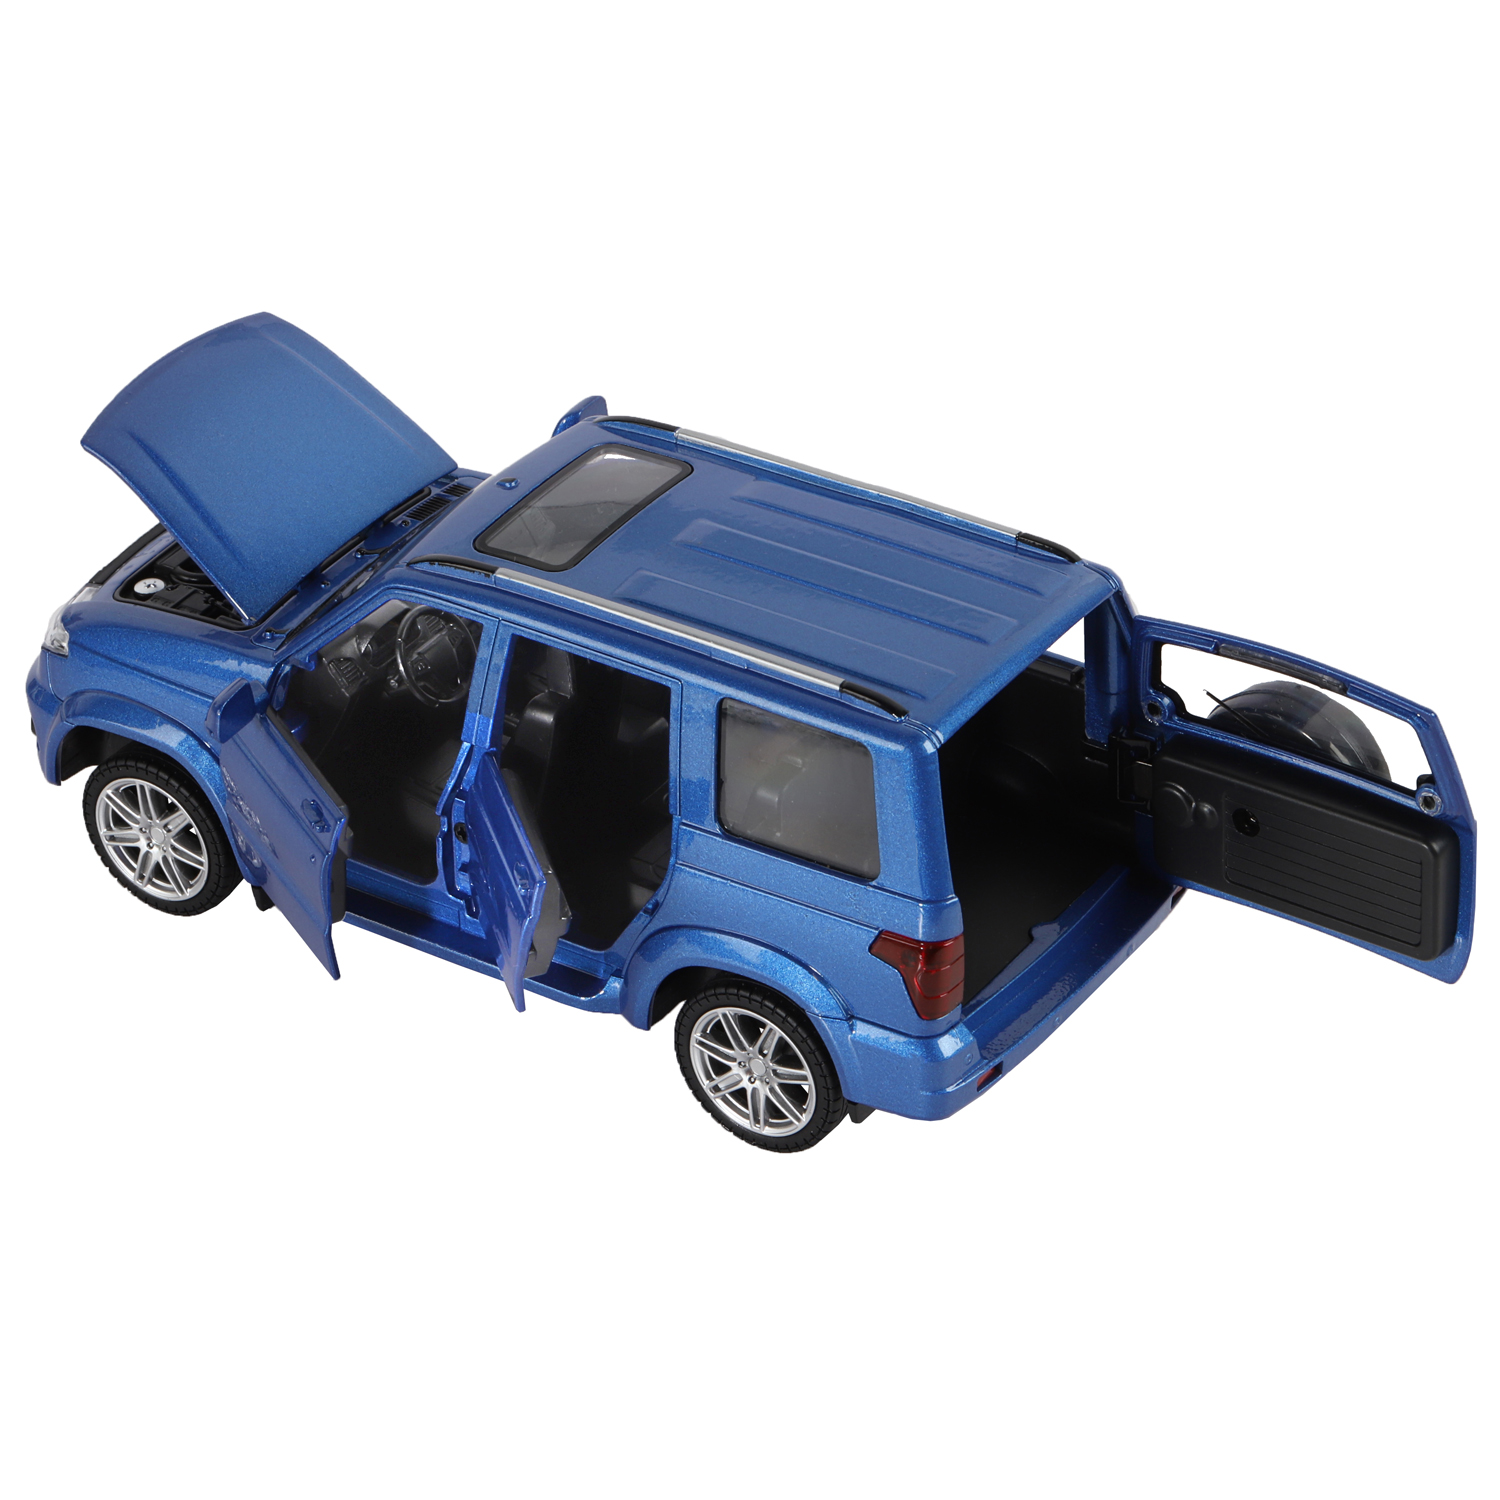 Машина метал. Автопанорама УАЗ Patriot темно-синий металлик, откр двери,капот,задняя двер,свет,звук